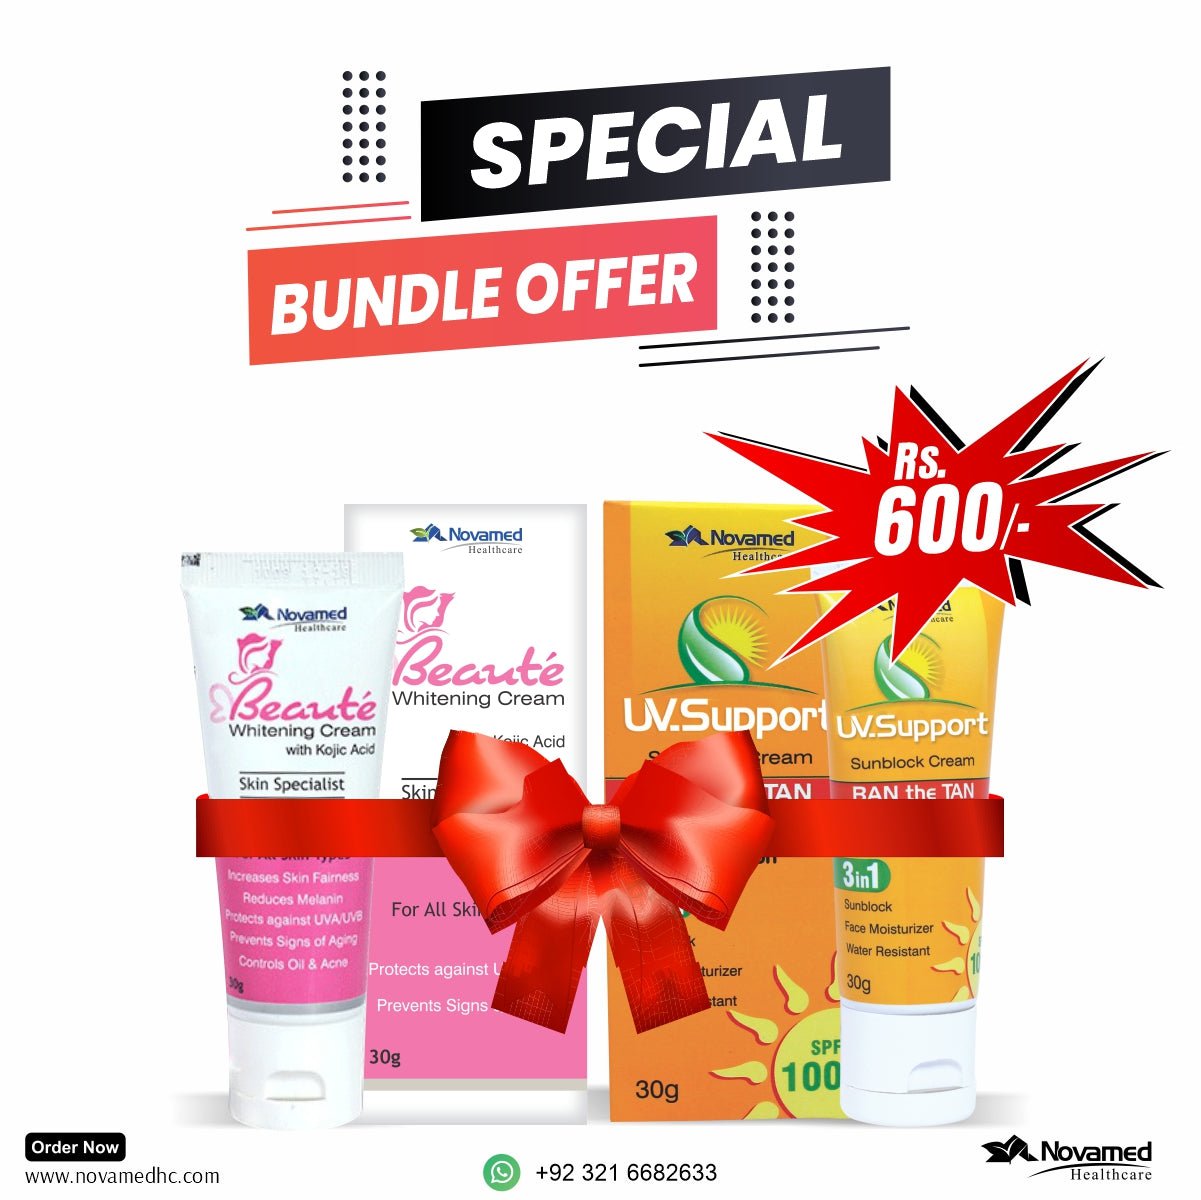 Special 1+1 Offer (Beaute 1 Pack + UV Support Sunblock 1 Pack) - Novamed Healthcare